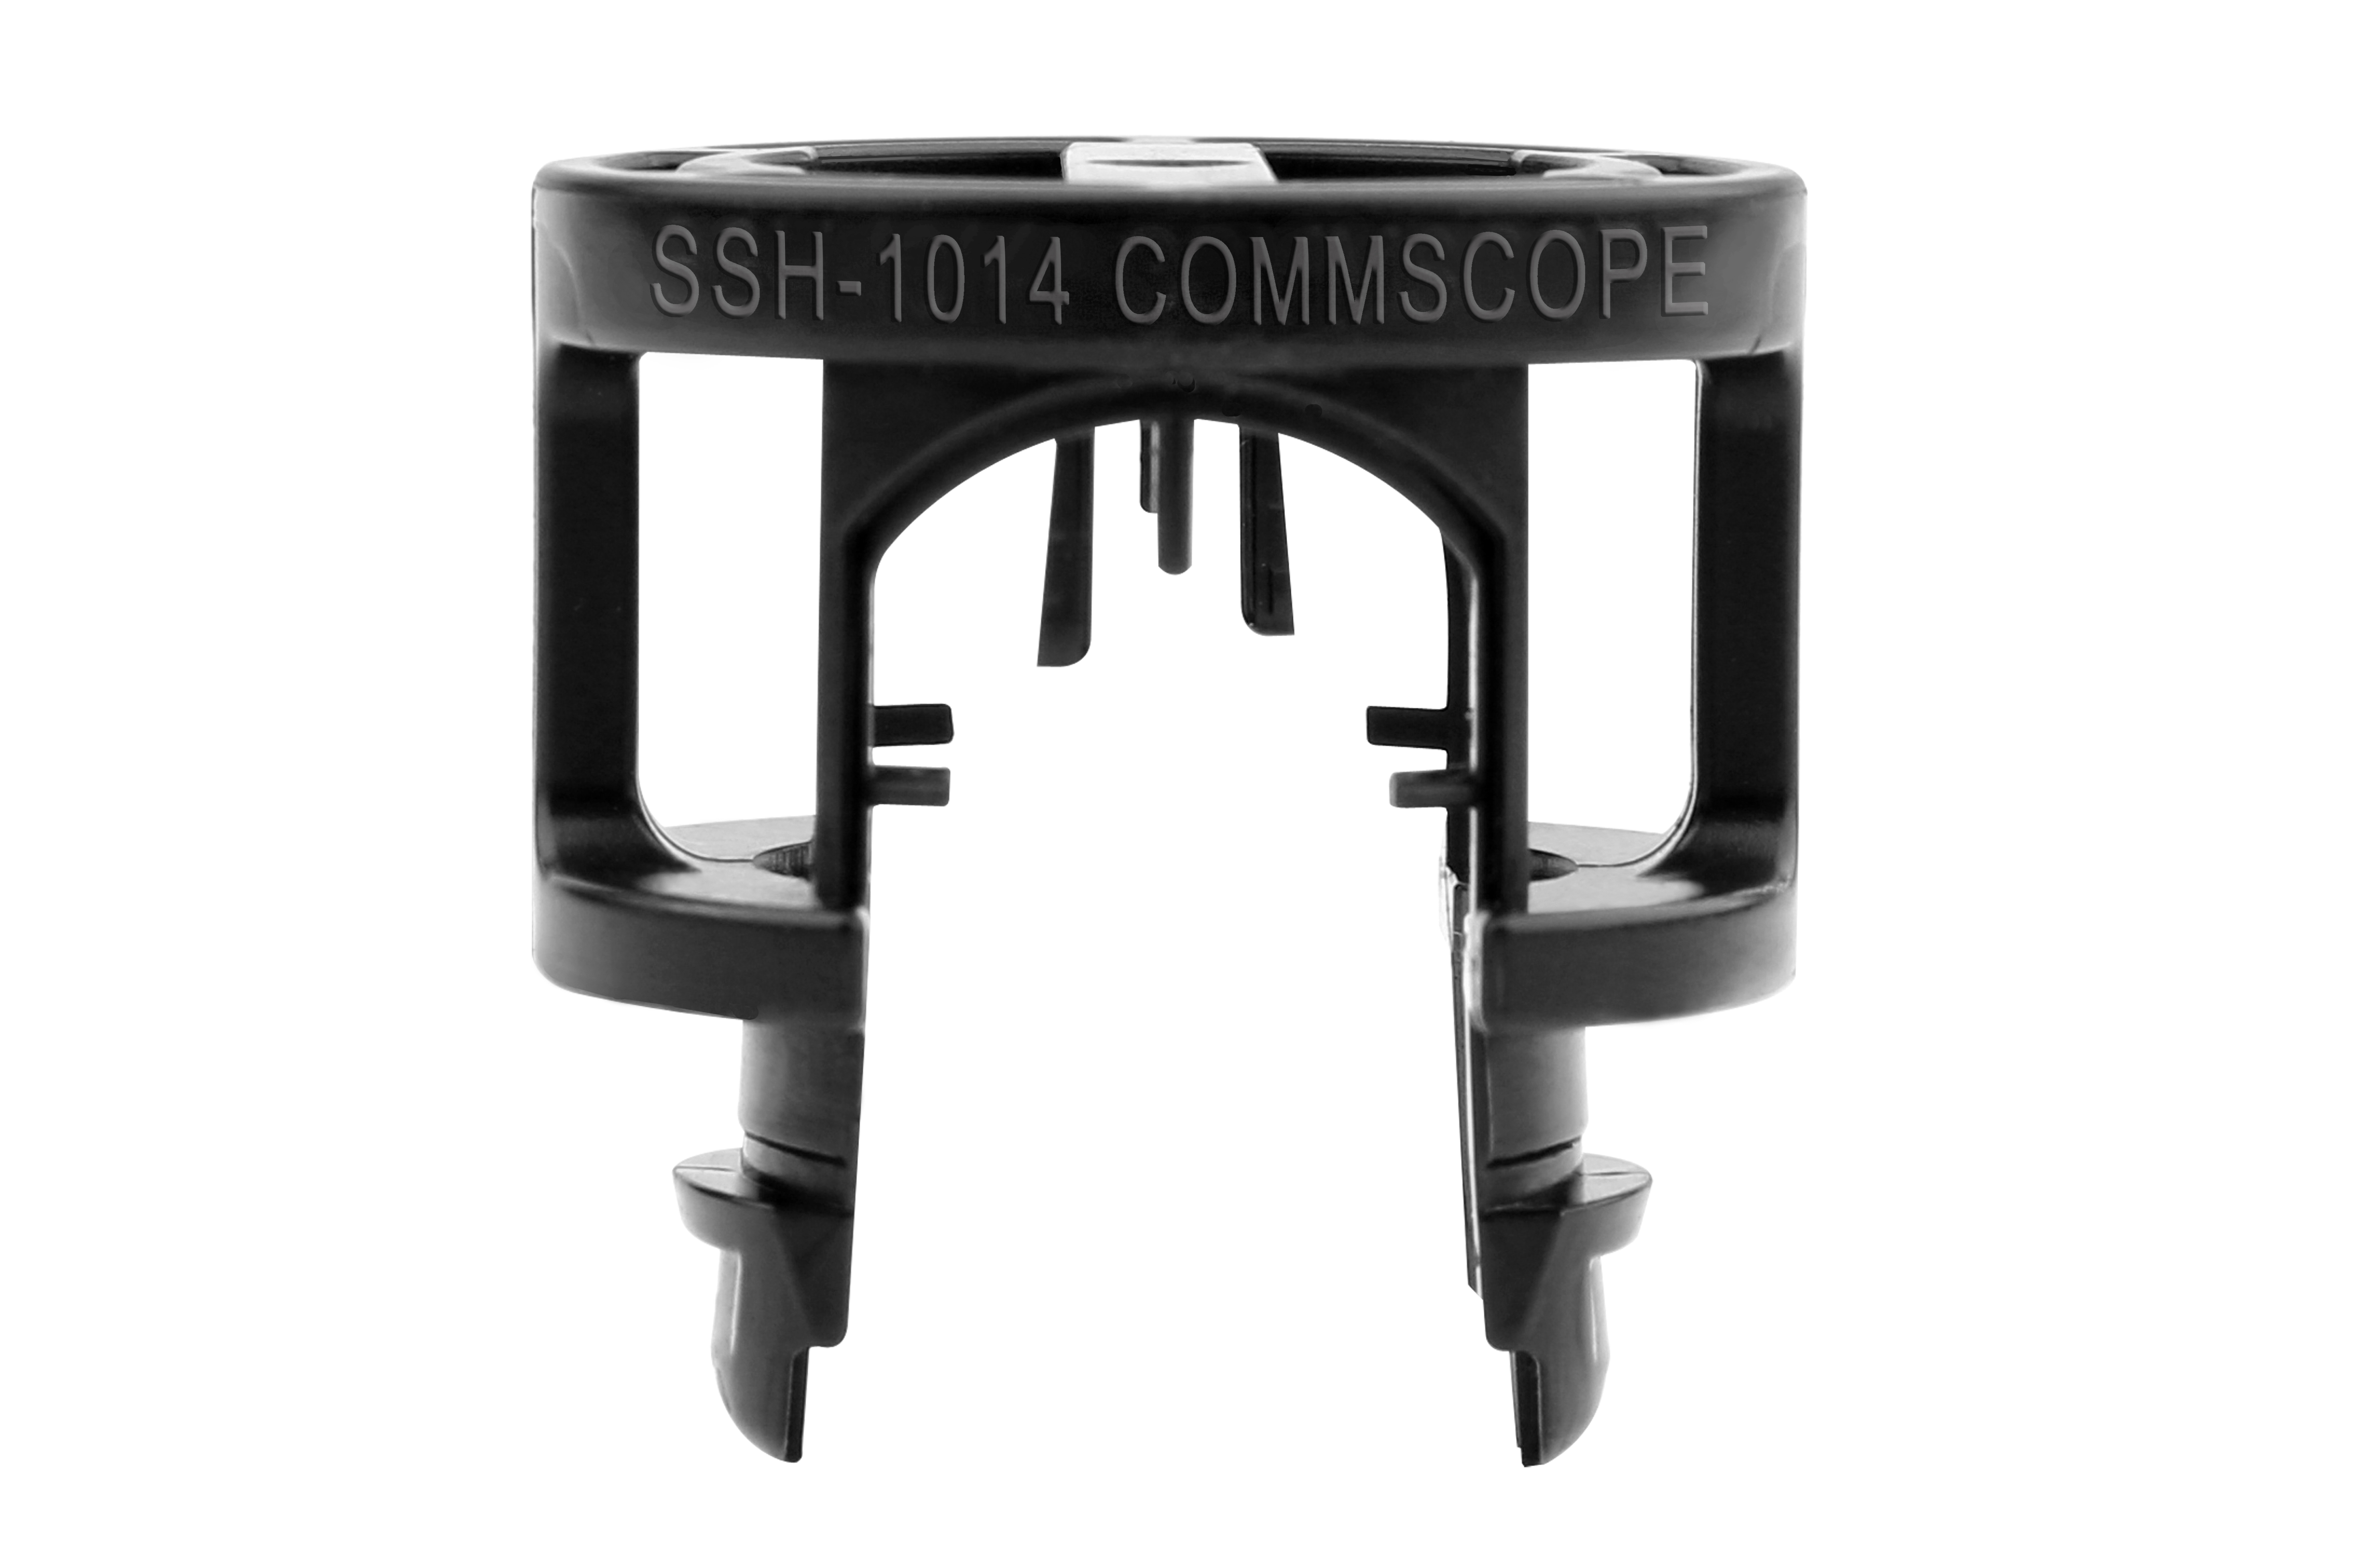 SSH-1014 | CommScope